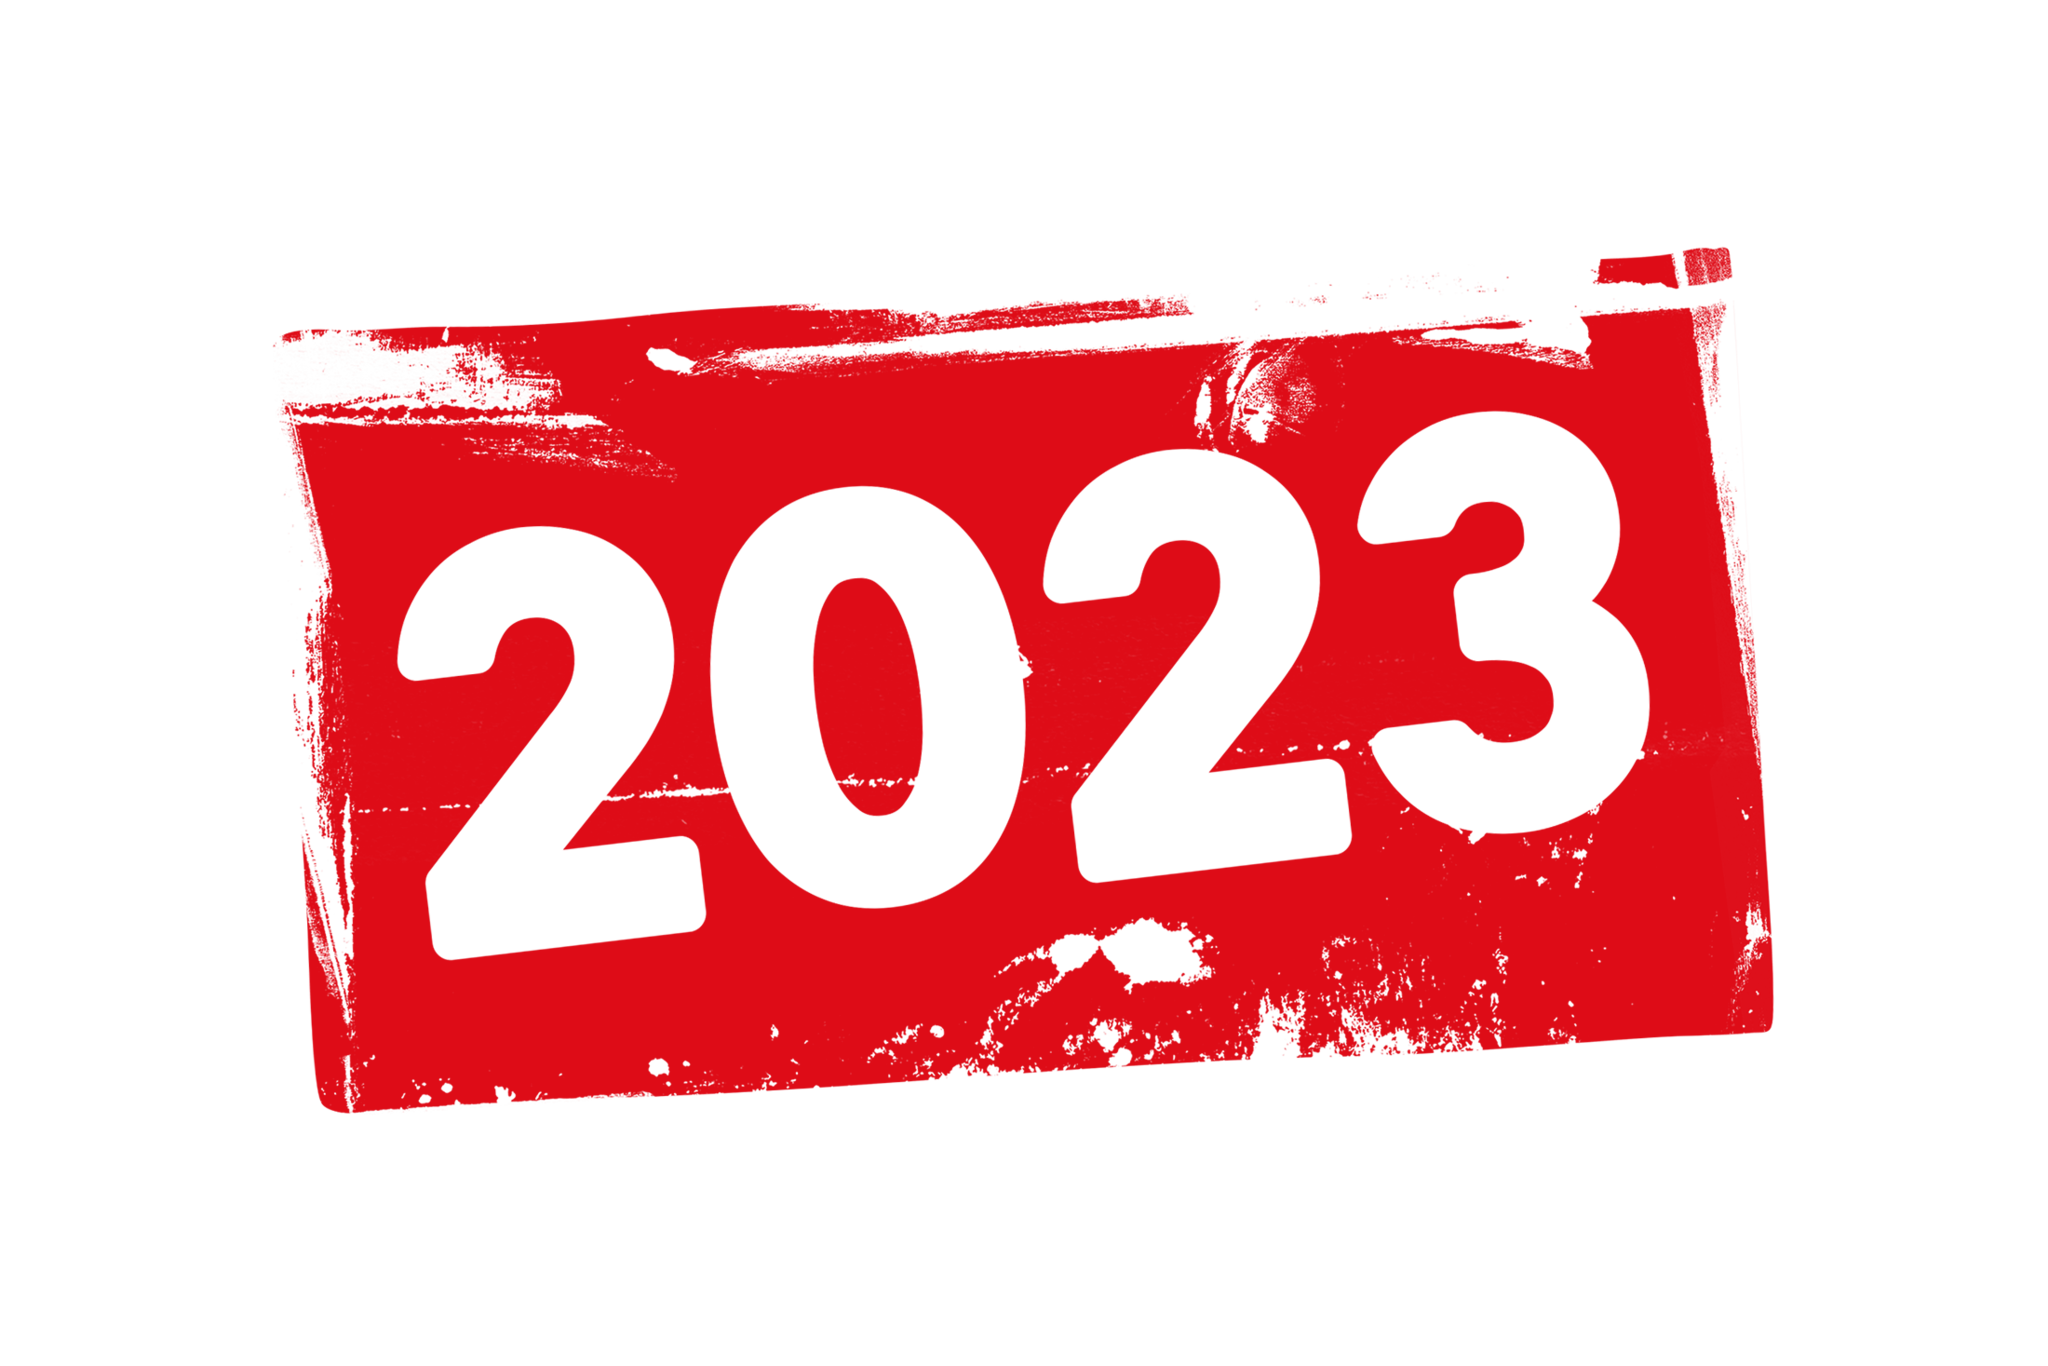 Удачного года 2023. 2023 Год. Цифры 2023. Надпись 2023 год. Прозрачная надпись 2023.